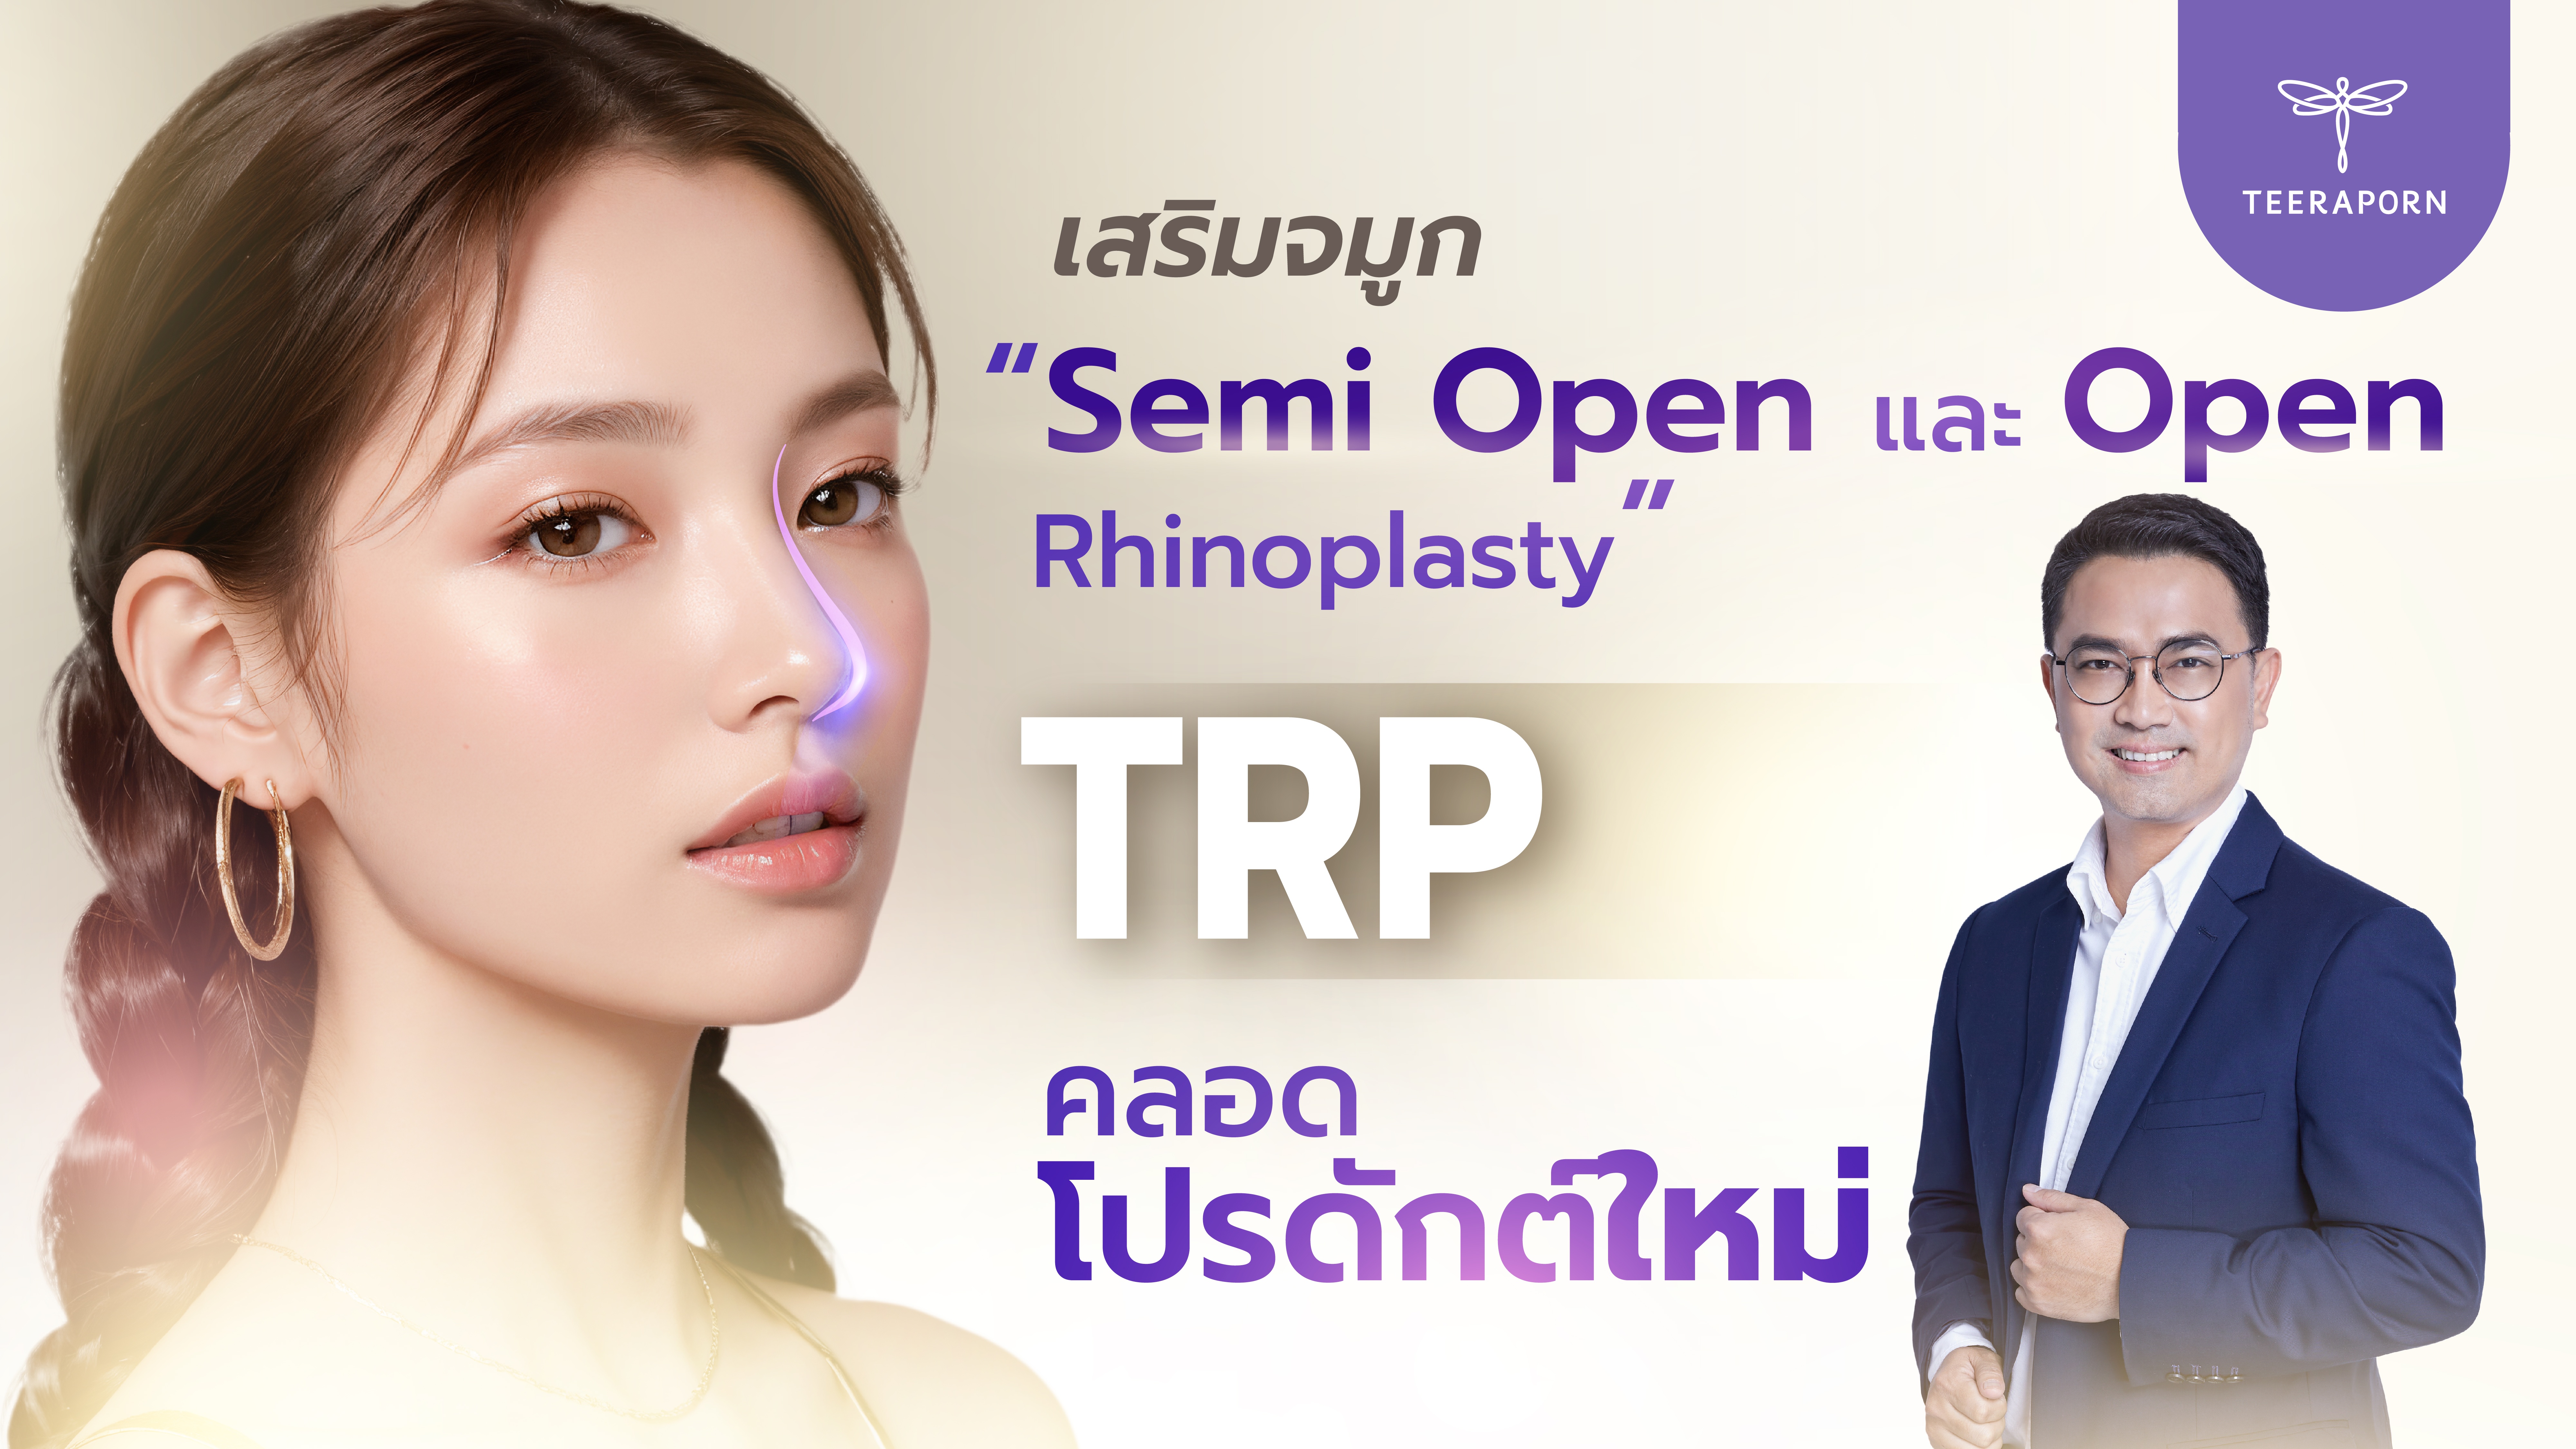 TRP คลอดโปรดักต์ใหม่ เสริมจมูกแบบ “Semi Open และ Open Rhinoplasty”  เพิ่มยอดขาย-ขยายตลาด หนุนผลงานโตตามเป้า   